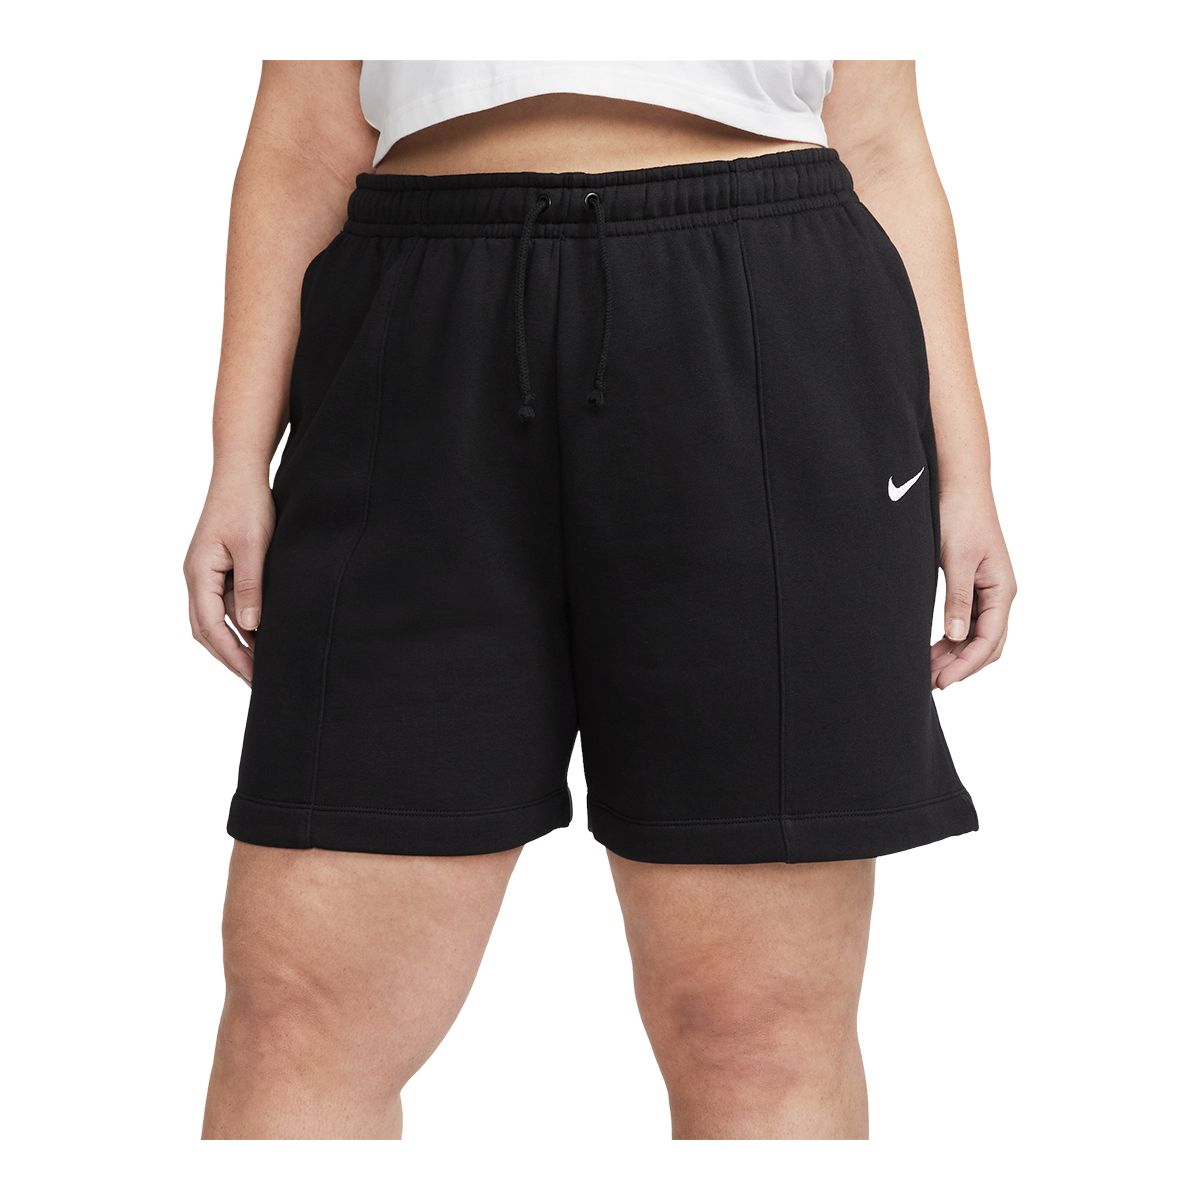 Nike Women's Collection Fleece High Rise Shorts